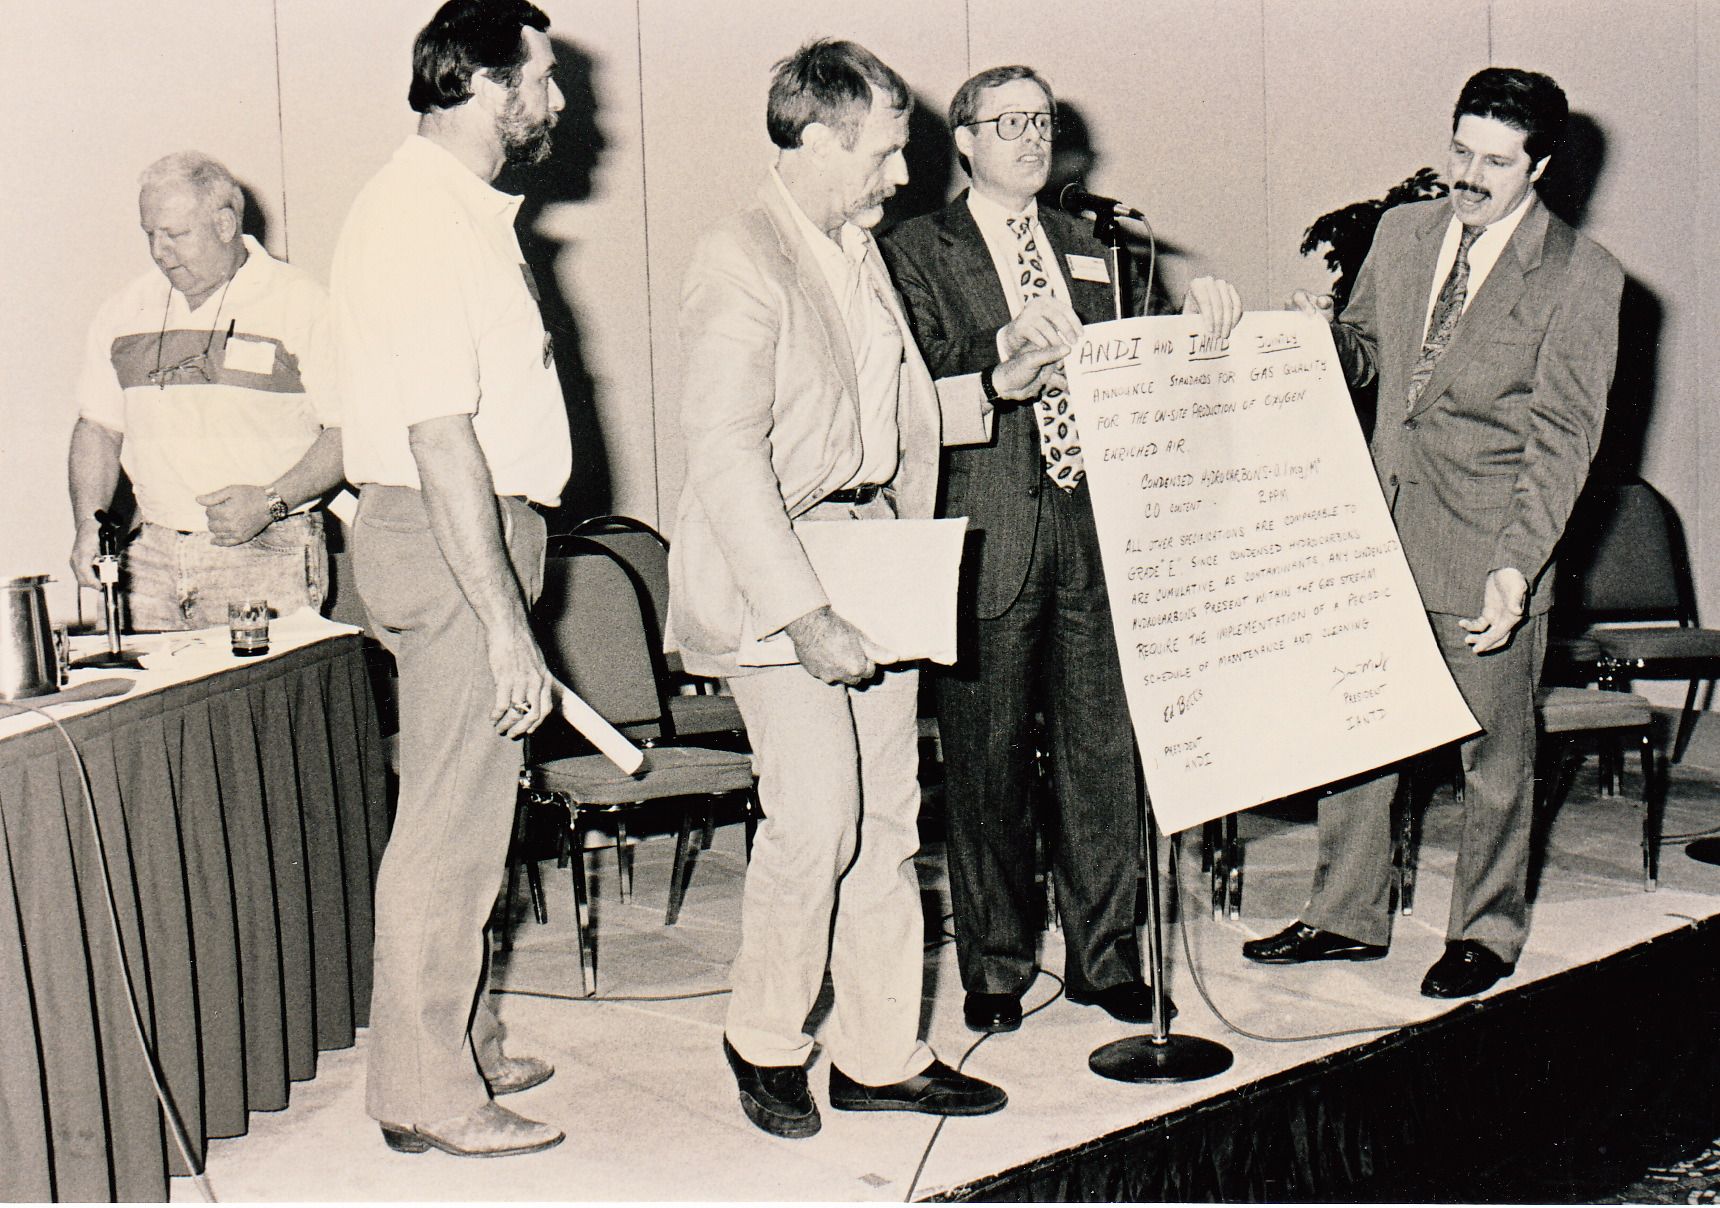 Steve Bielinda in background, foreground:  Frans Vandermolen, Tom Mount, Richard Nordstrom, and Ed Betts, presenting nitrox mixing standards